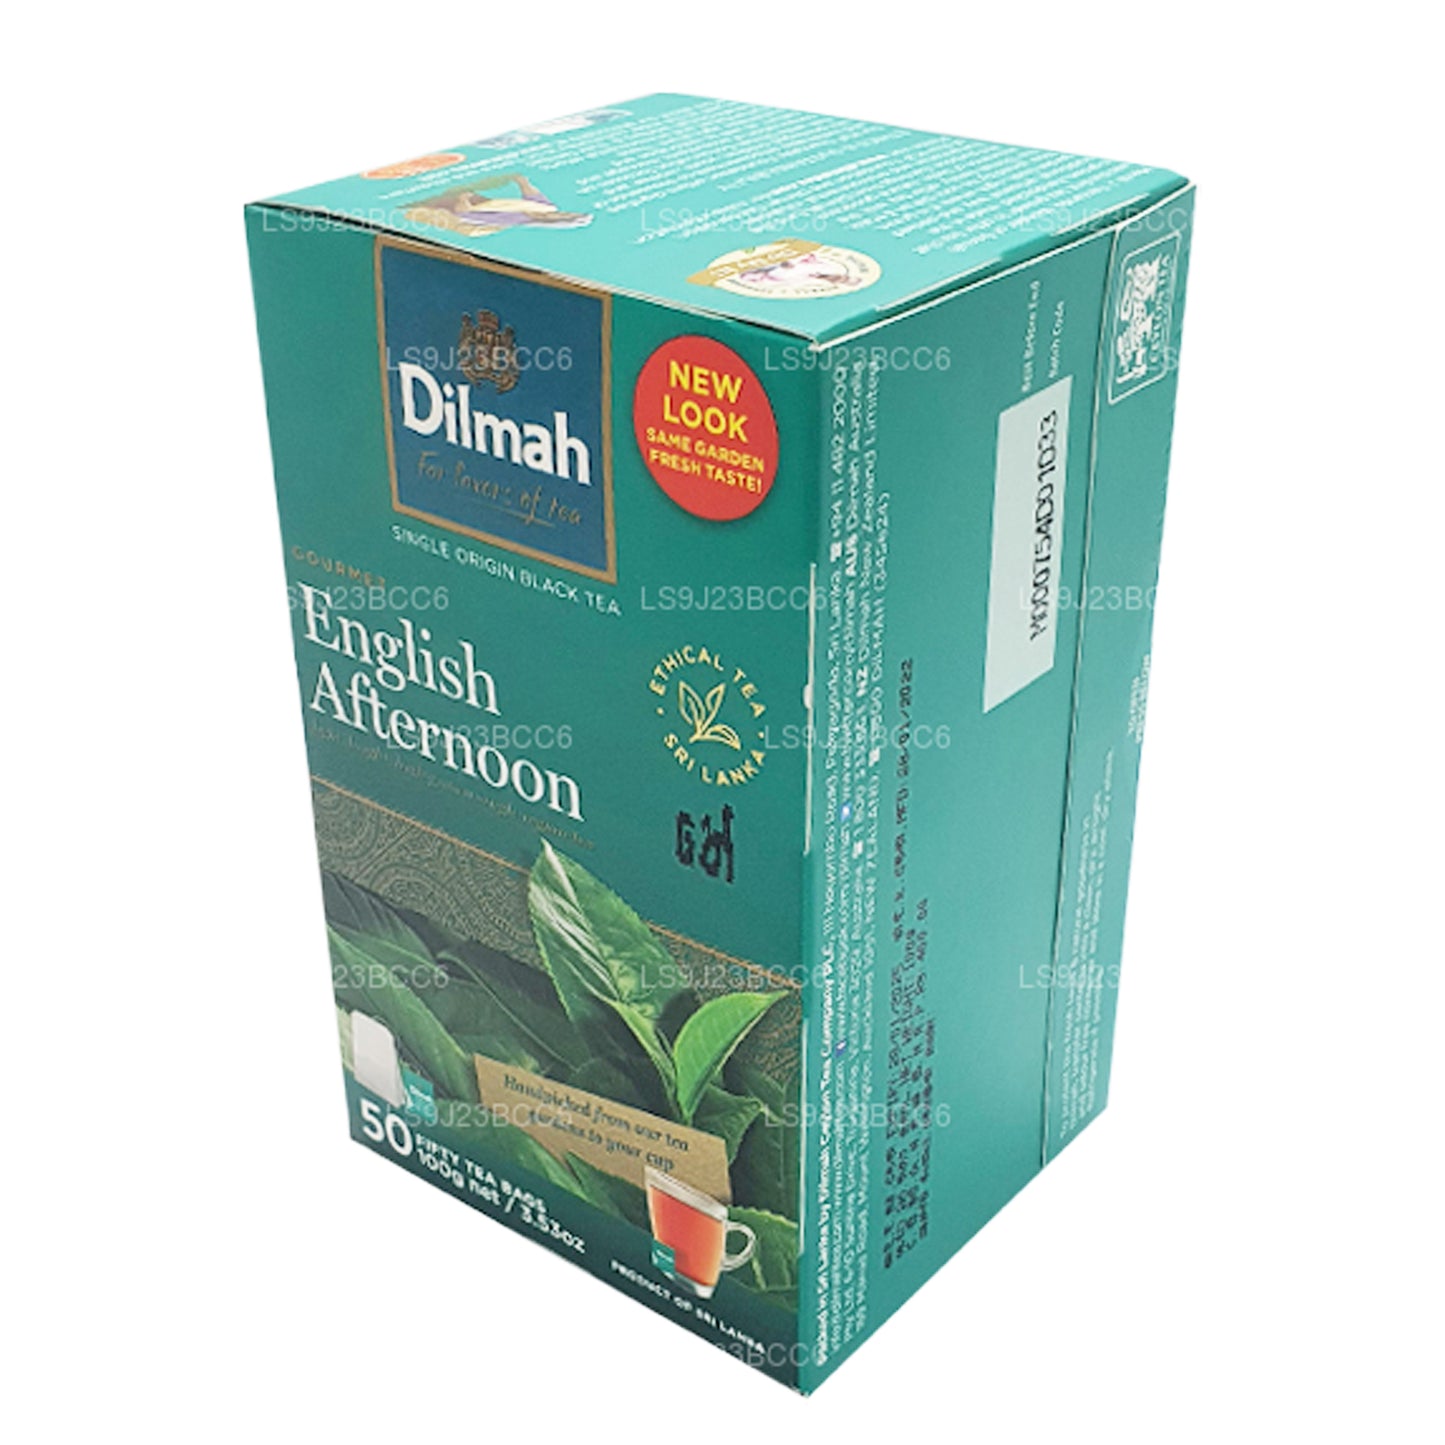 Dilmah English Afternoon Tea (100g) 50 Tea Bags